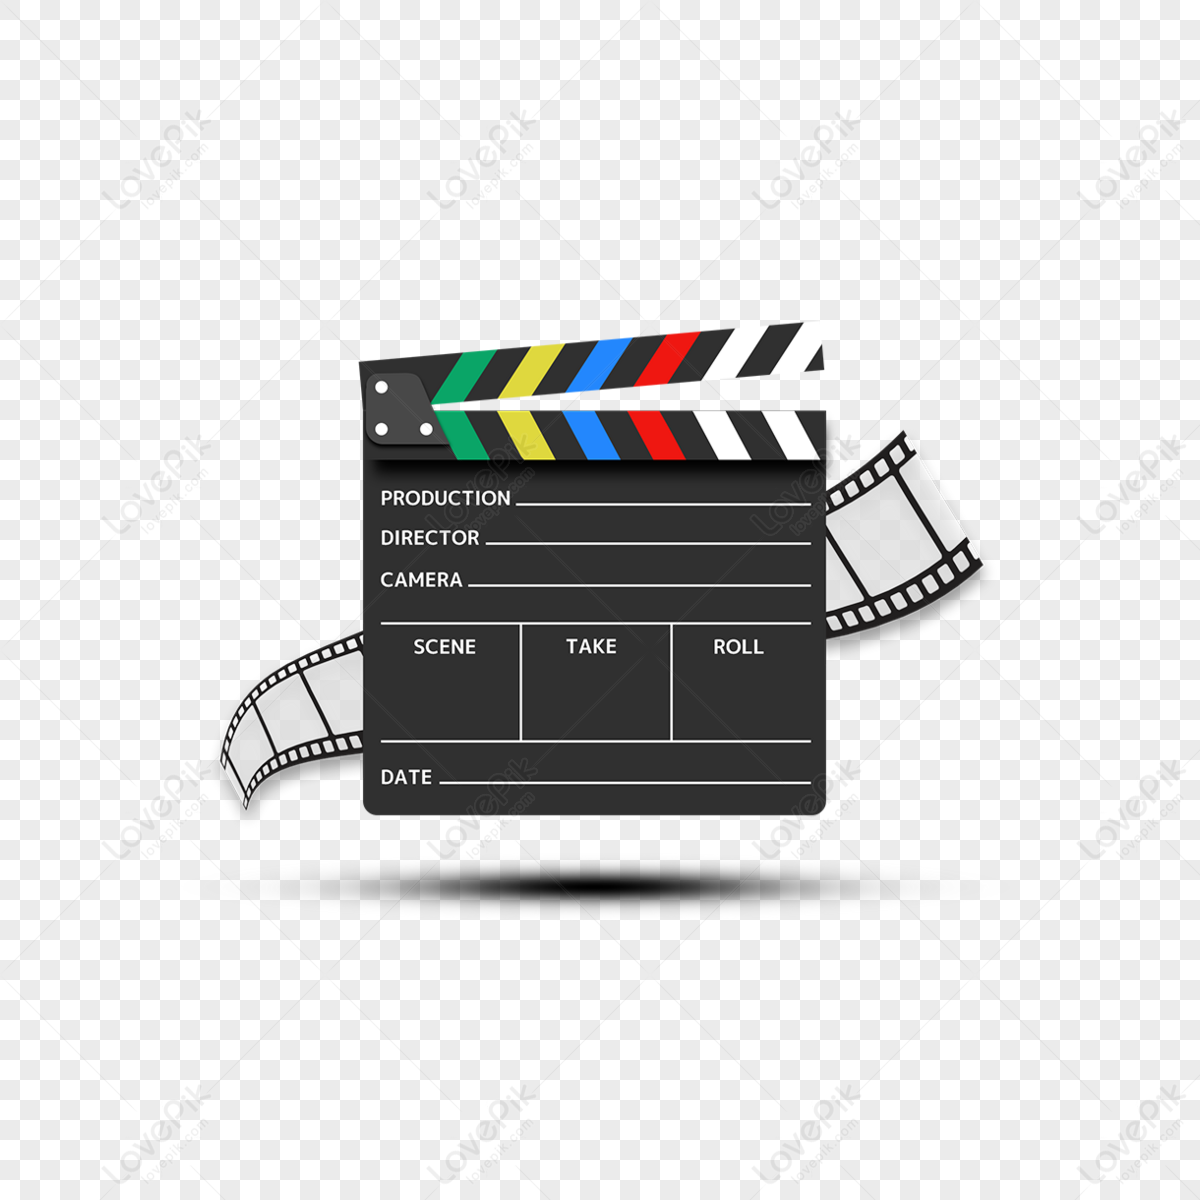 Clapperboard Film Reel PNG Images With Transparent Background